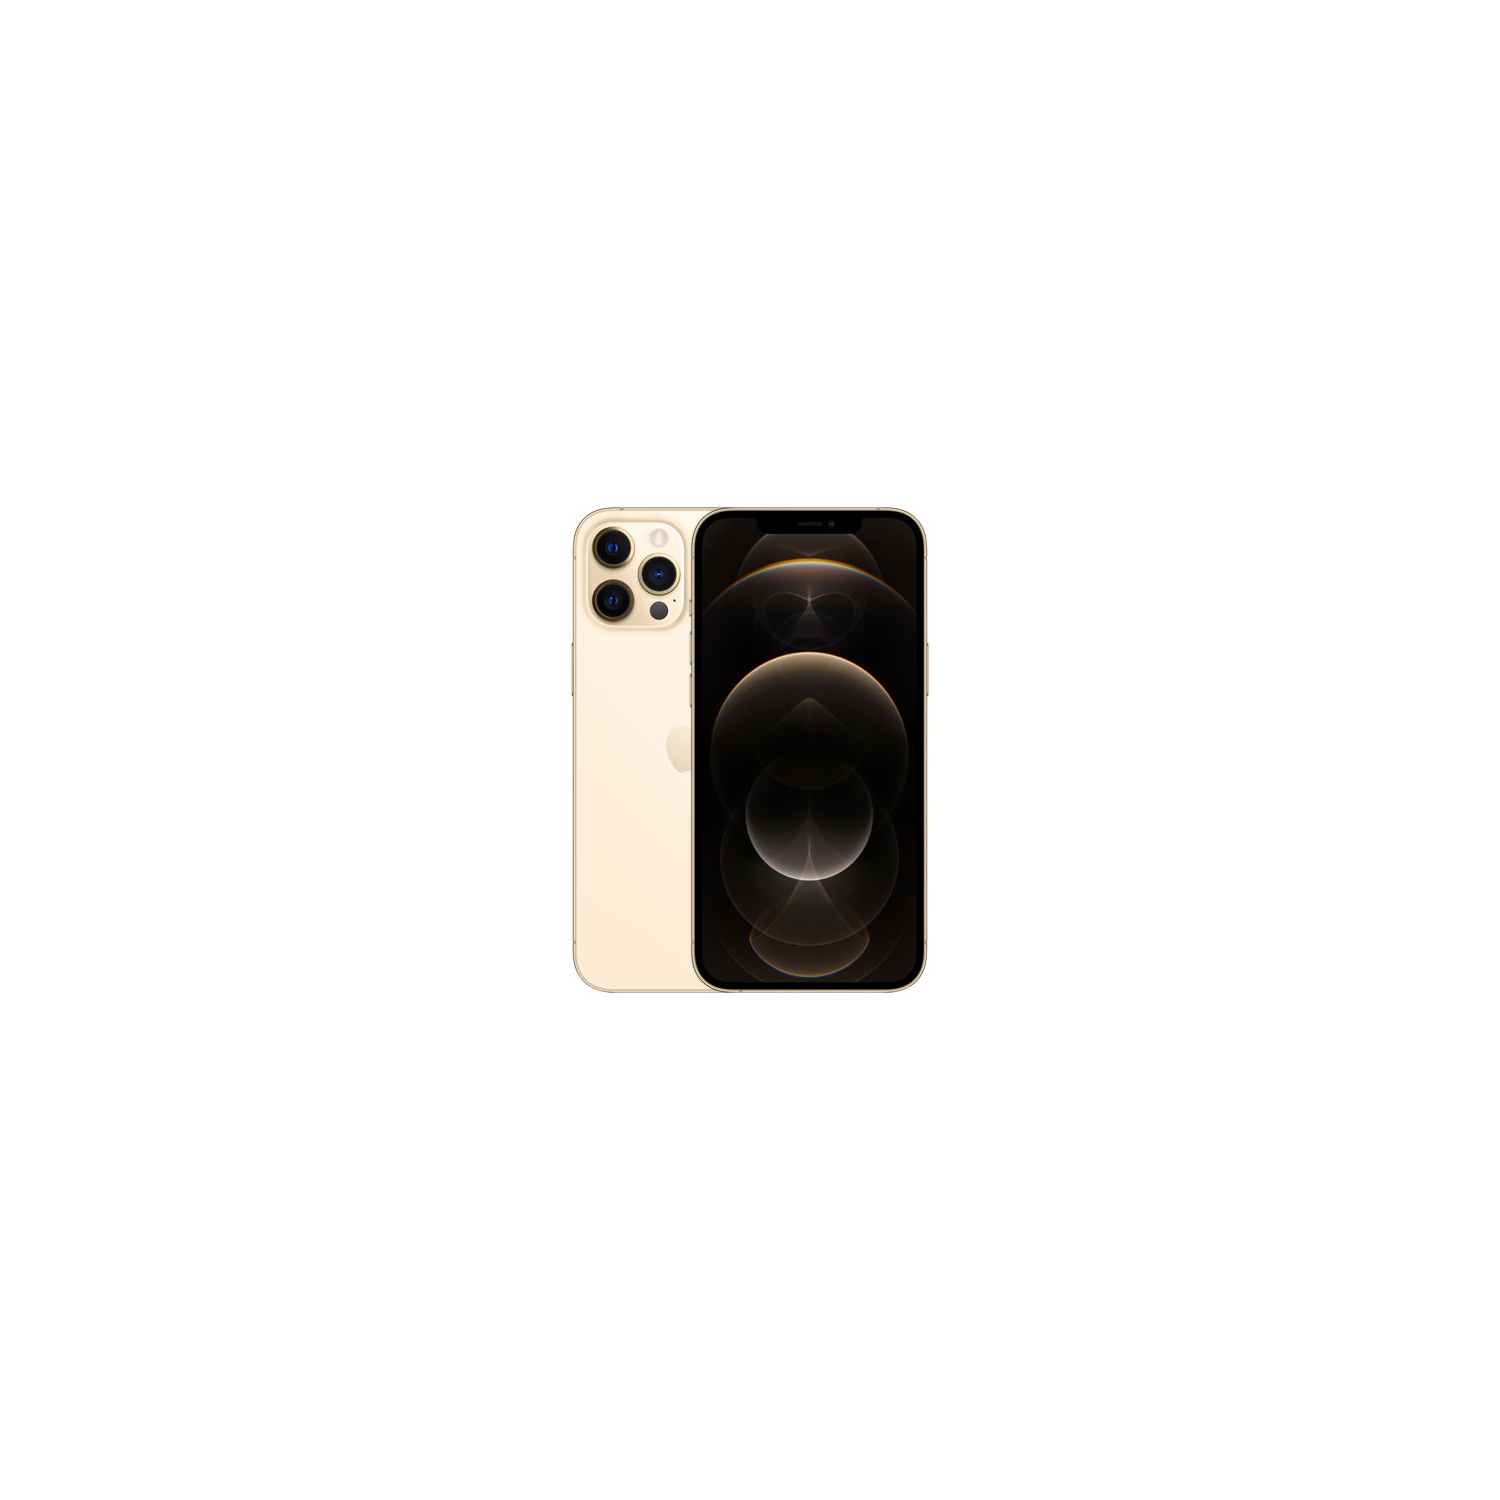 Apple iPhone 12 Pro Max 128GB Smartphone - Gold - Unlocked - Open Box